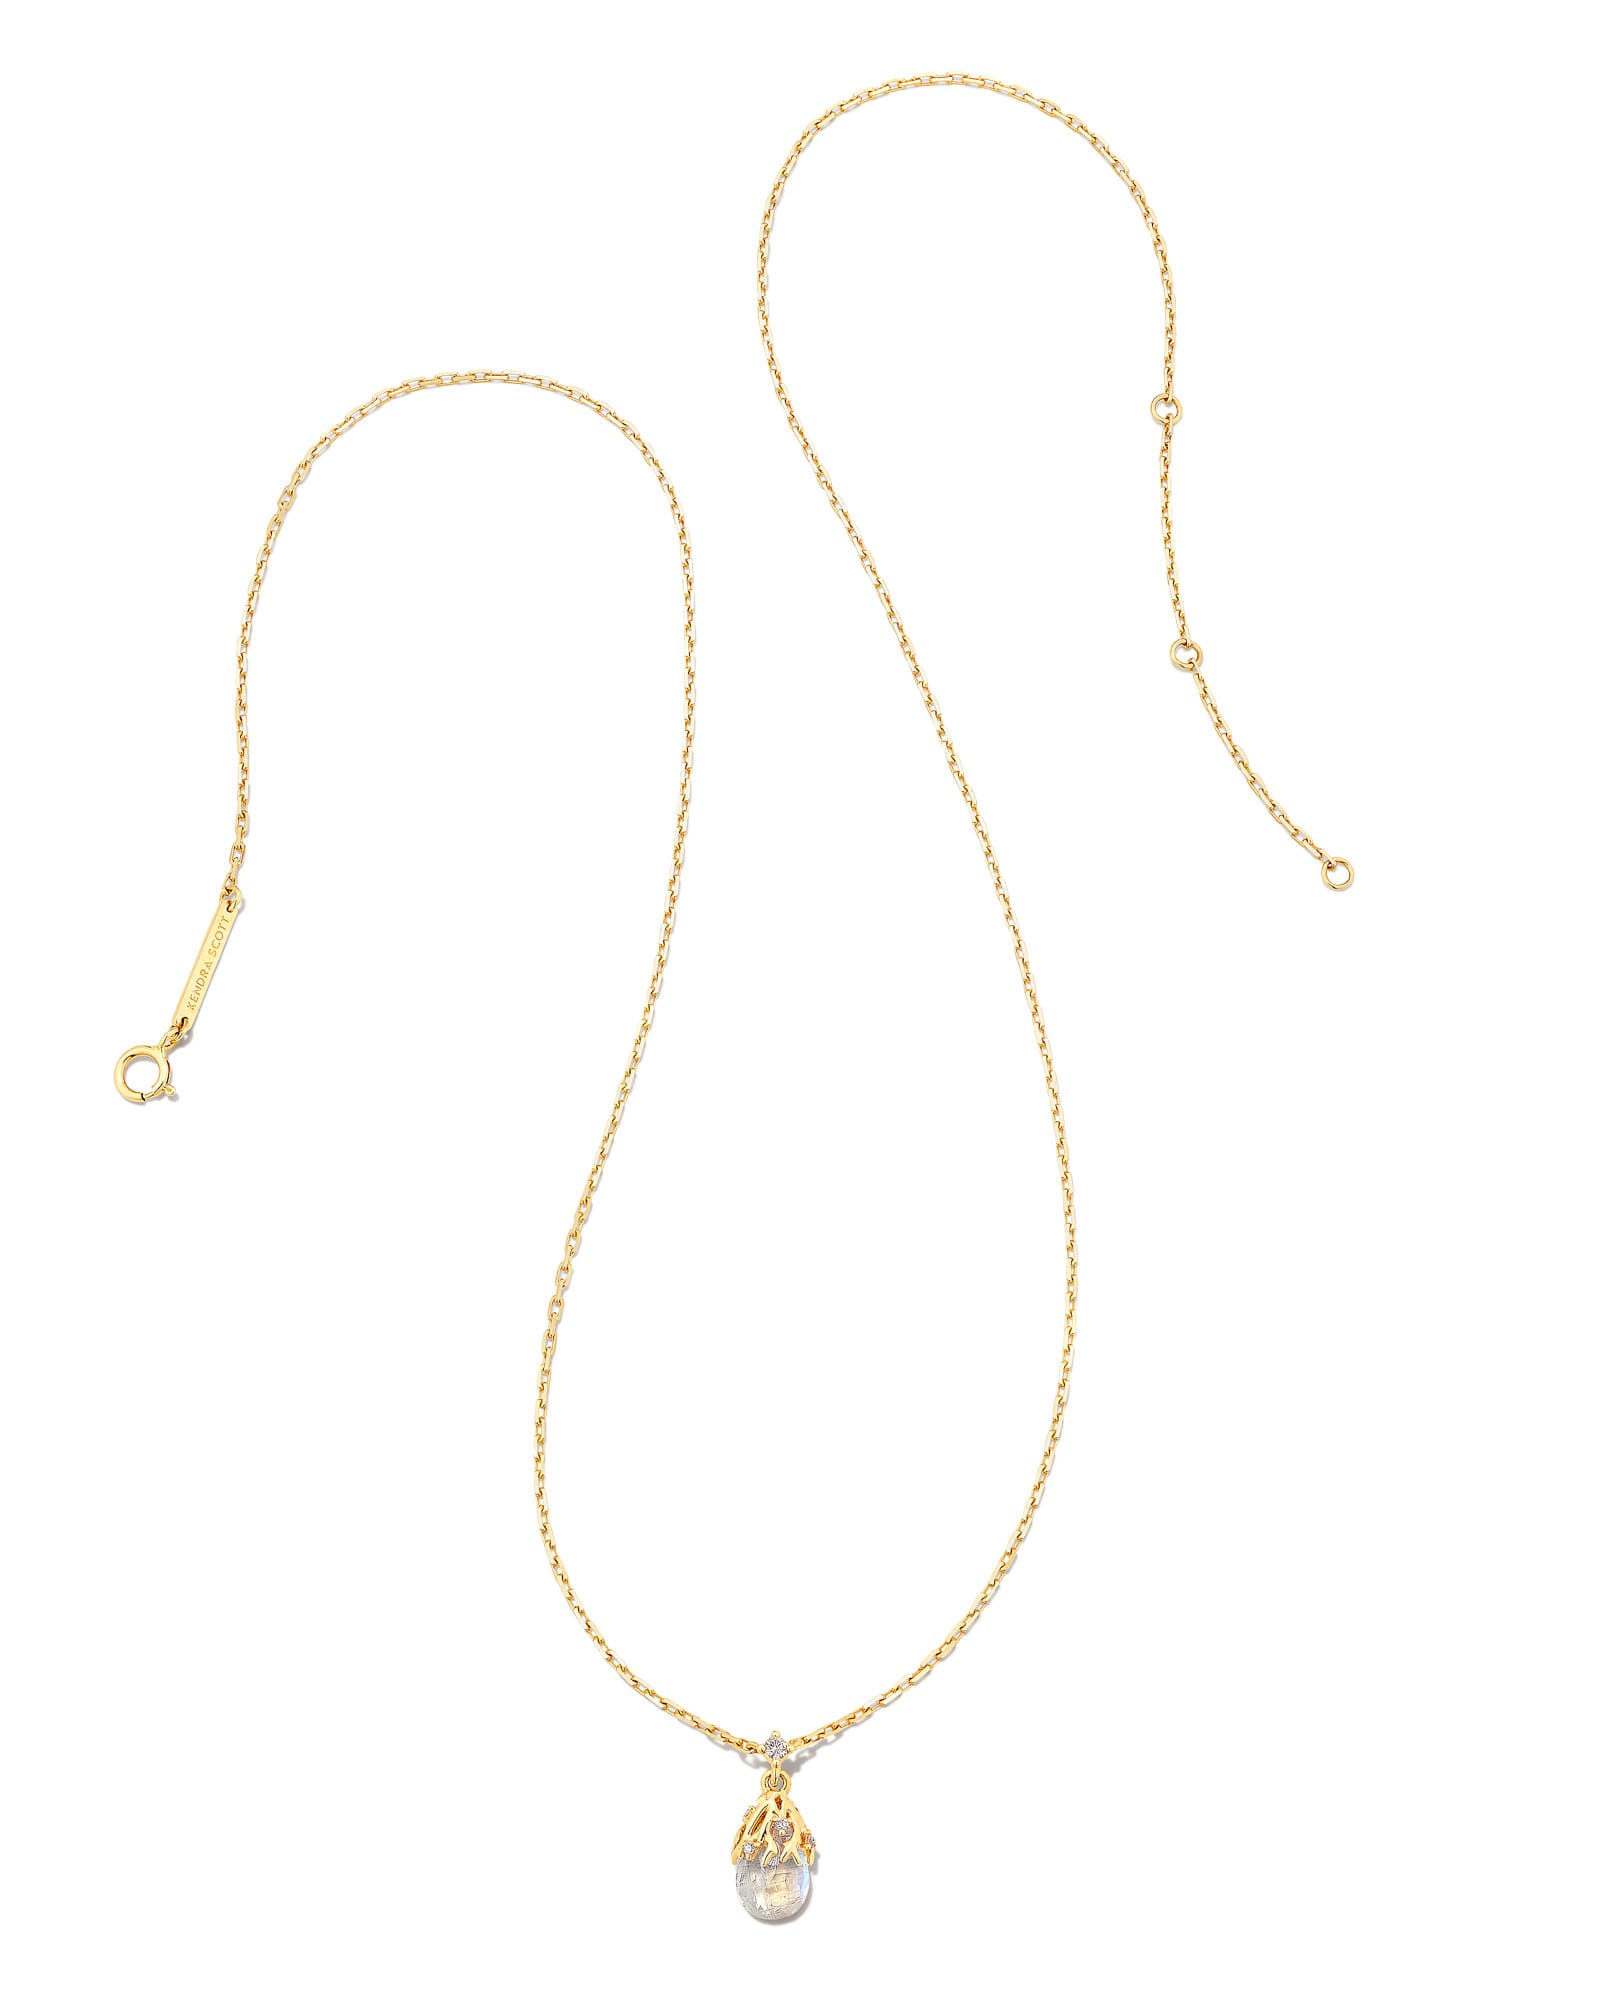 Noelle 14k Yellow Gold Pendant Necklace in Rainbow Moonstone